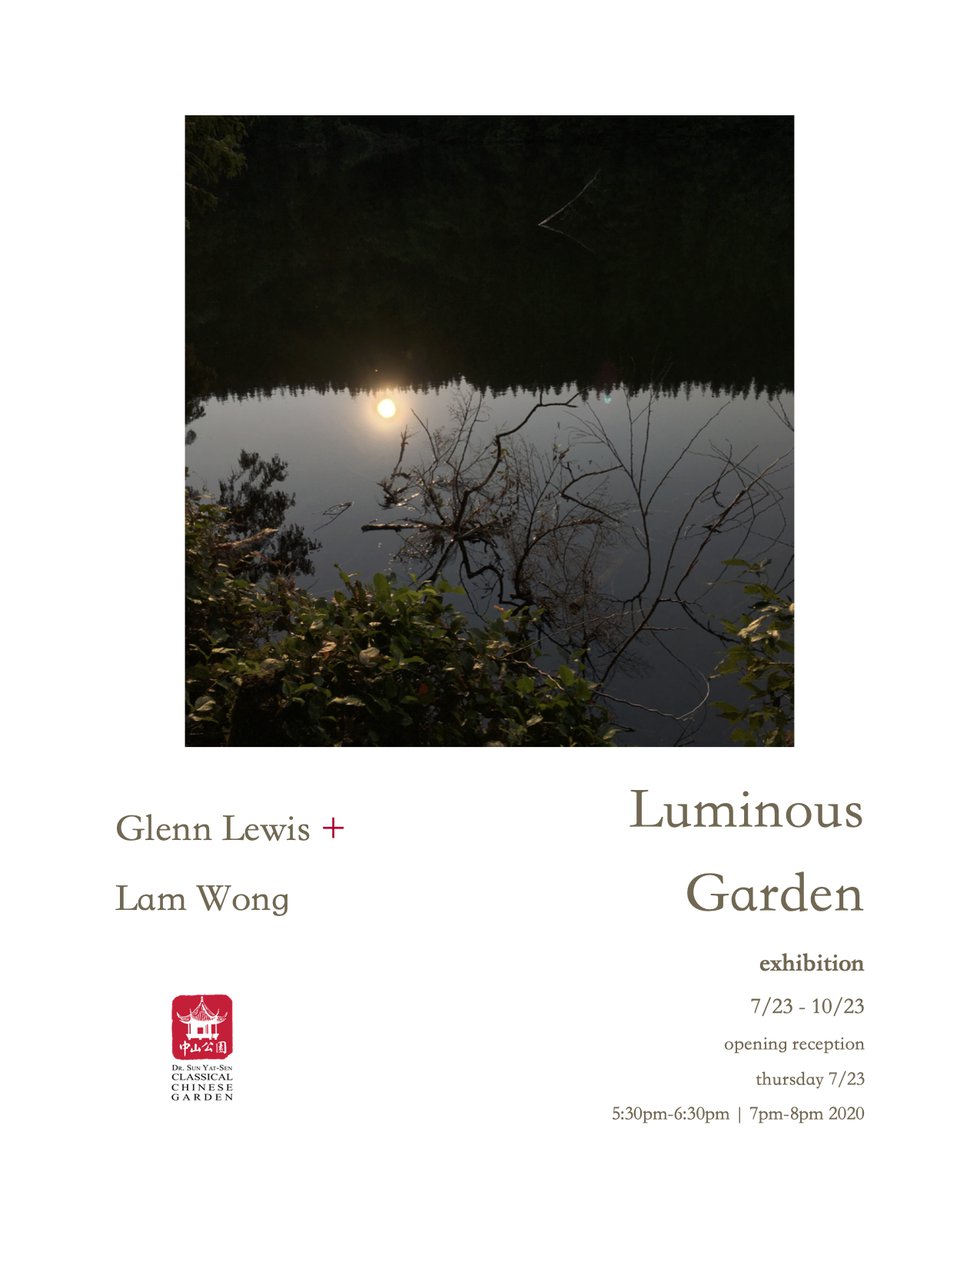 Lam Wong and Glenn Lewis, "Luminous Garden," 2020